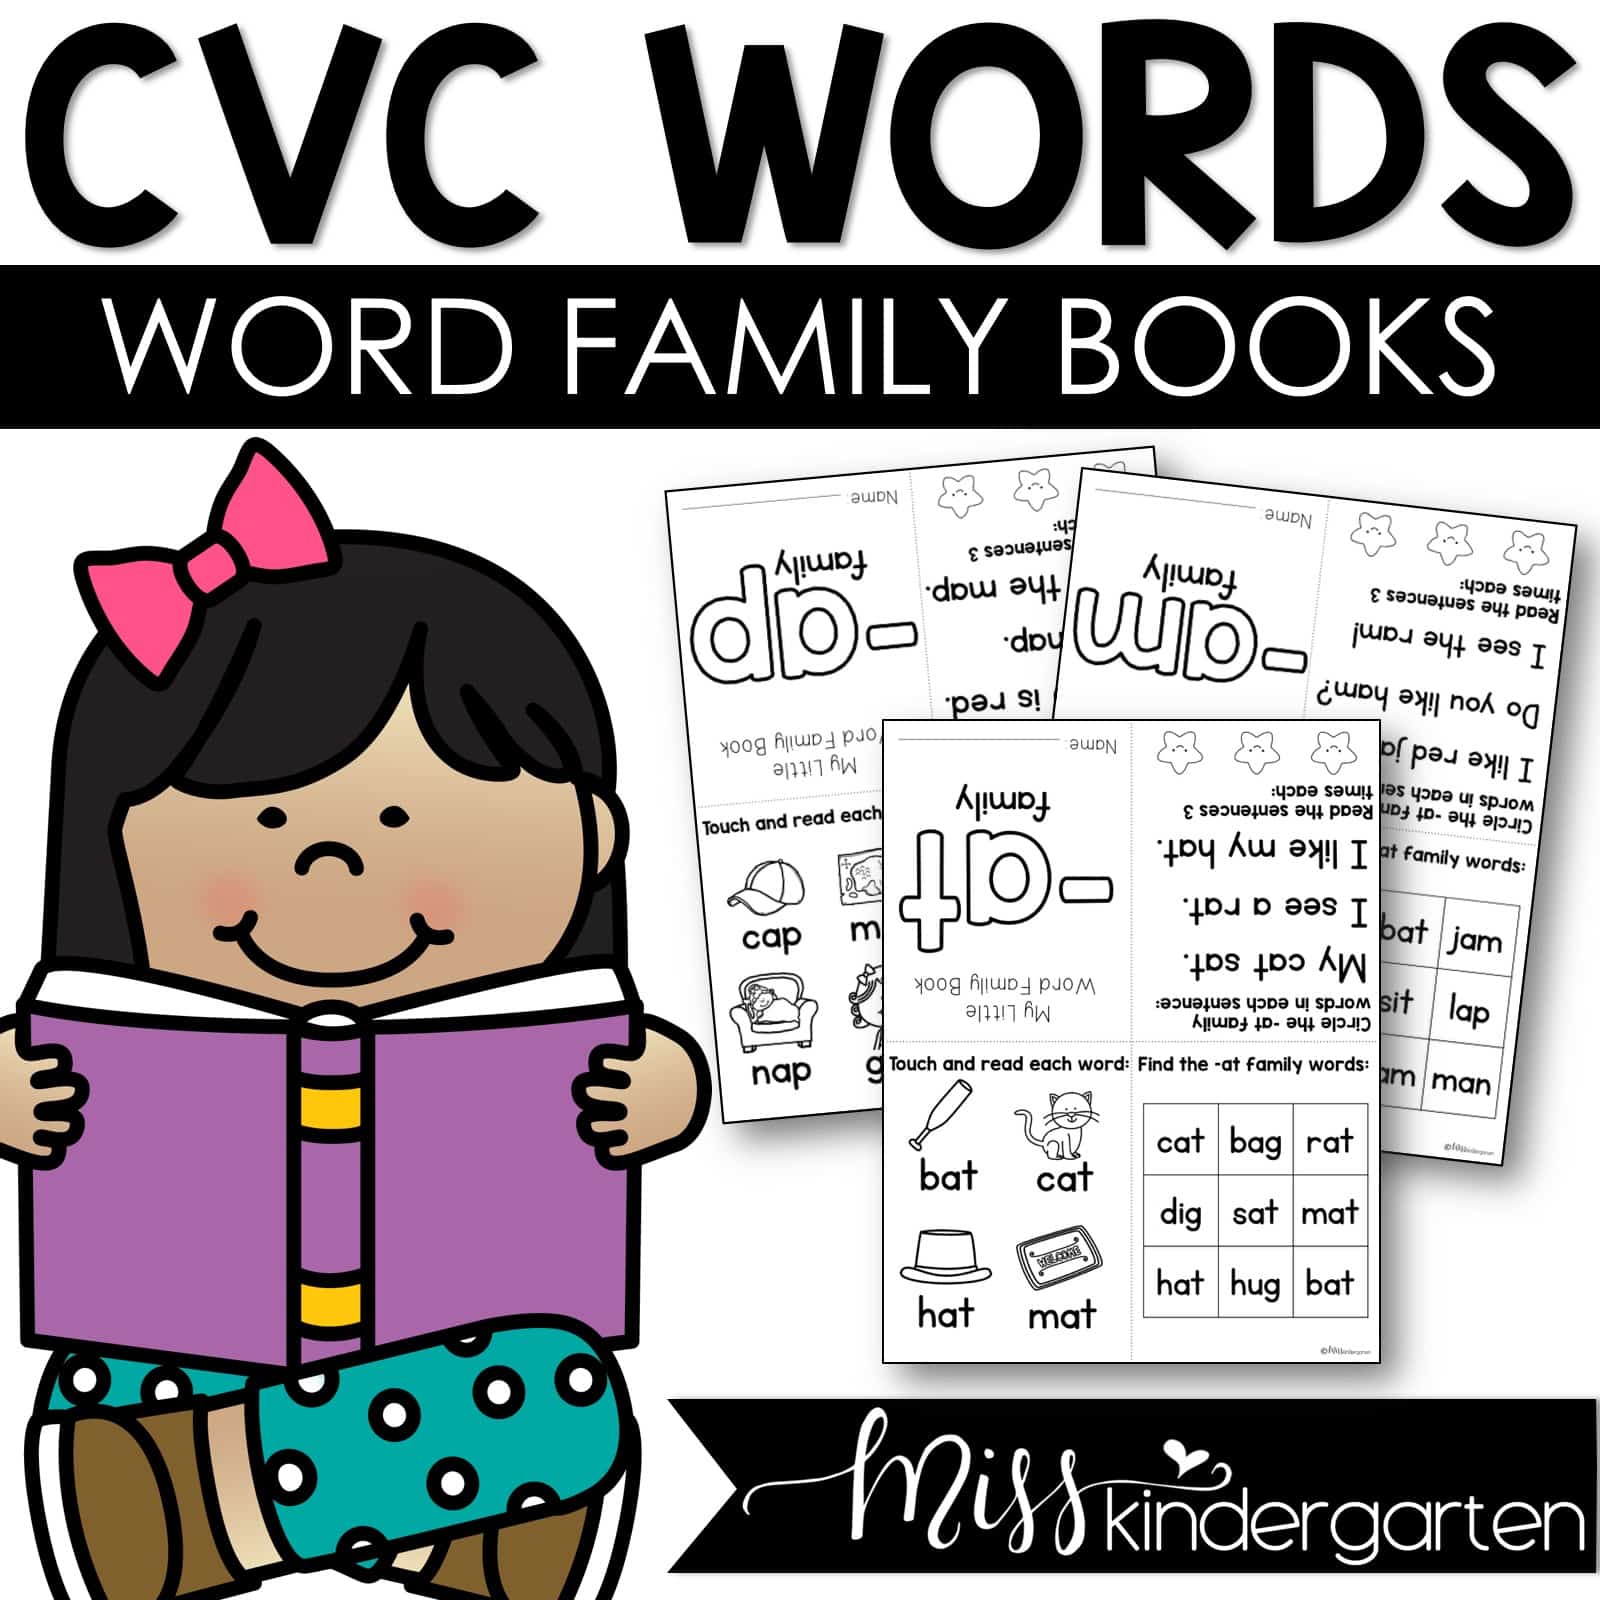 CVC Words Word Family Books